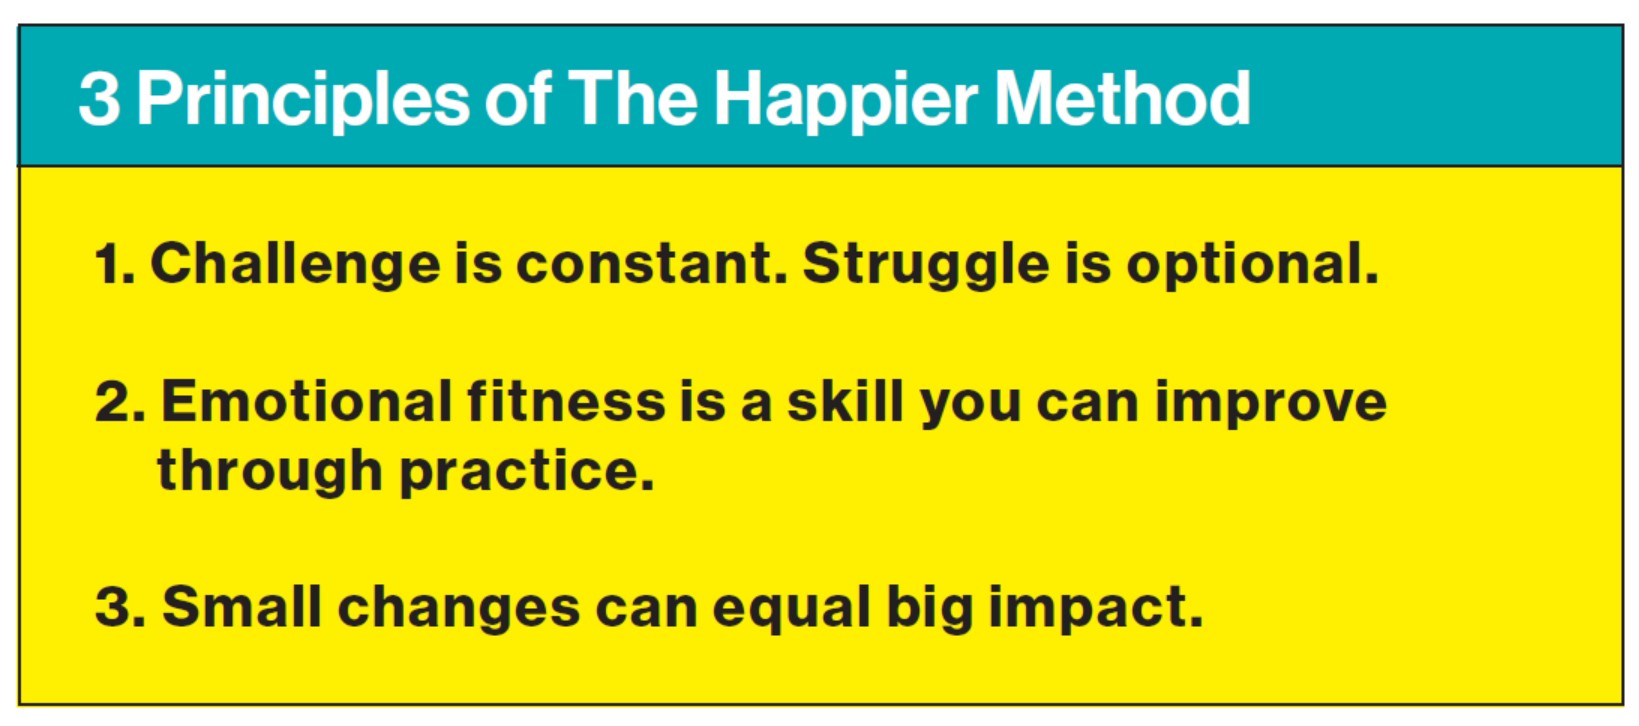 3 Principles of The Happier Method